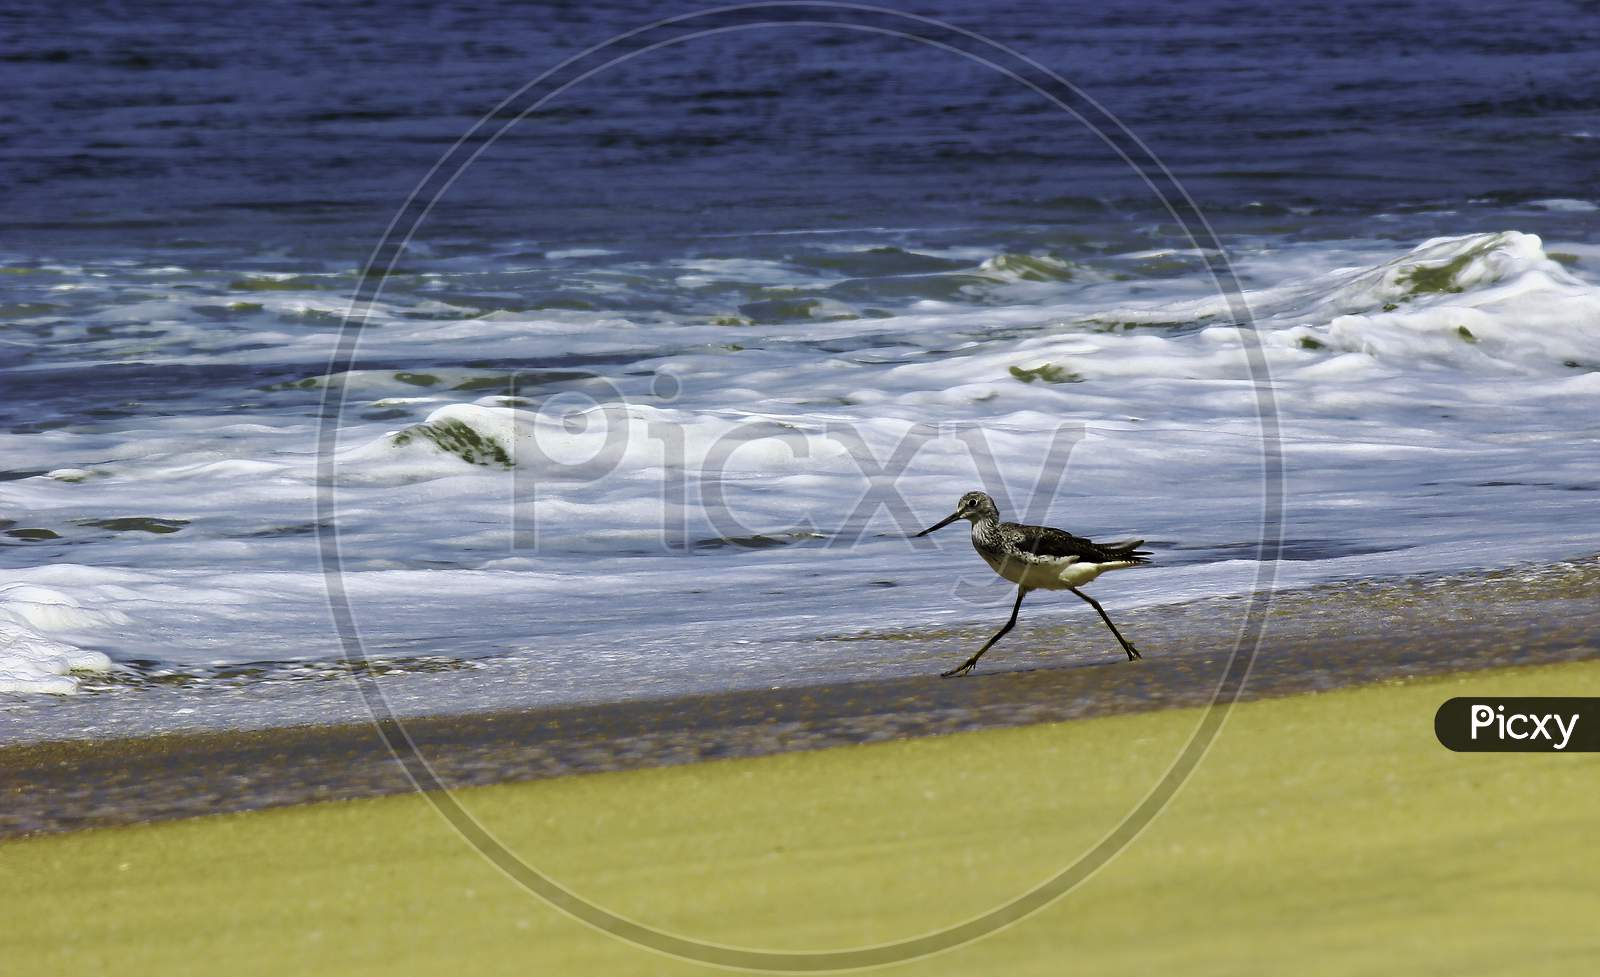 Common Greenshank, A Species Of Sandpipers Bird Walk On A Sandy Beach